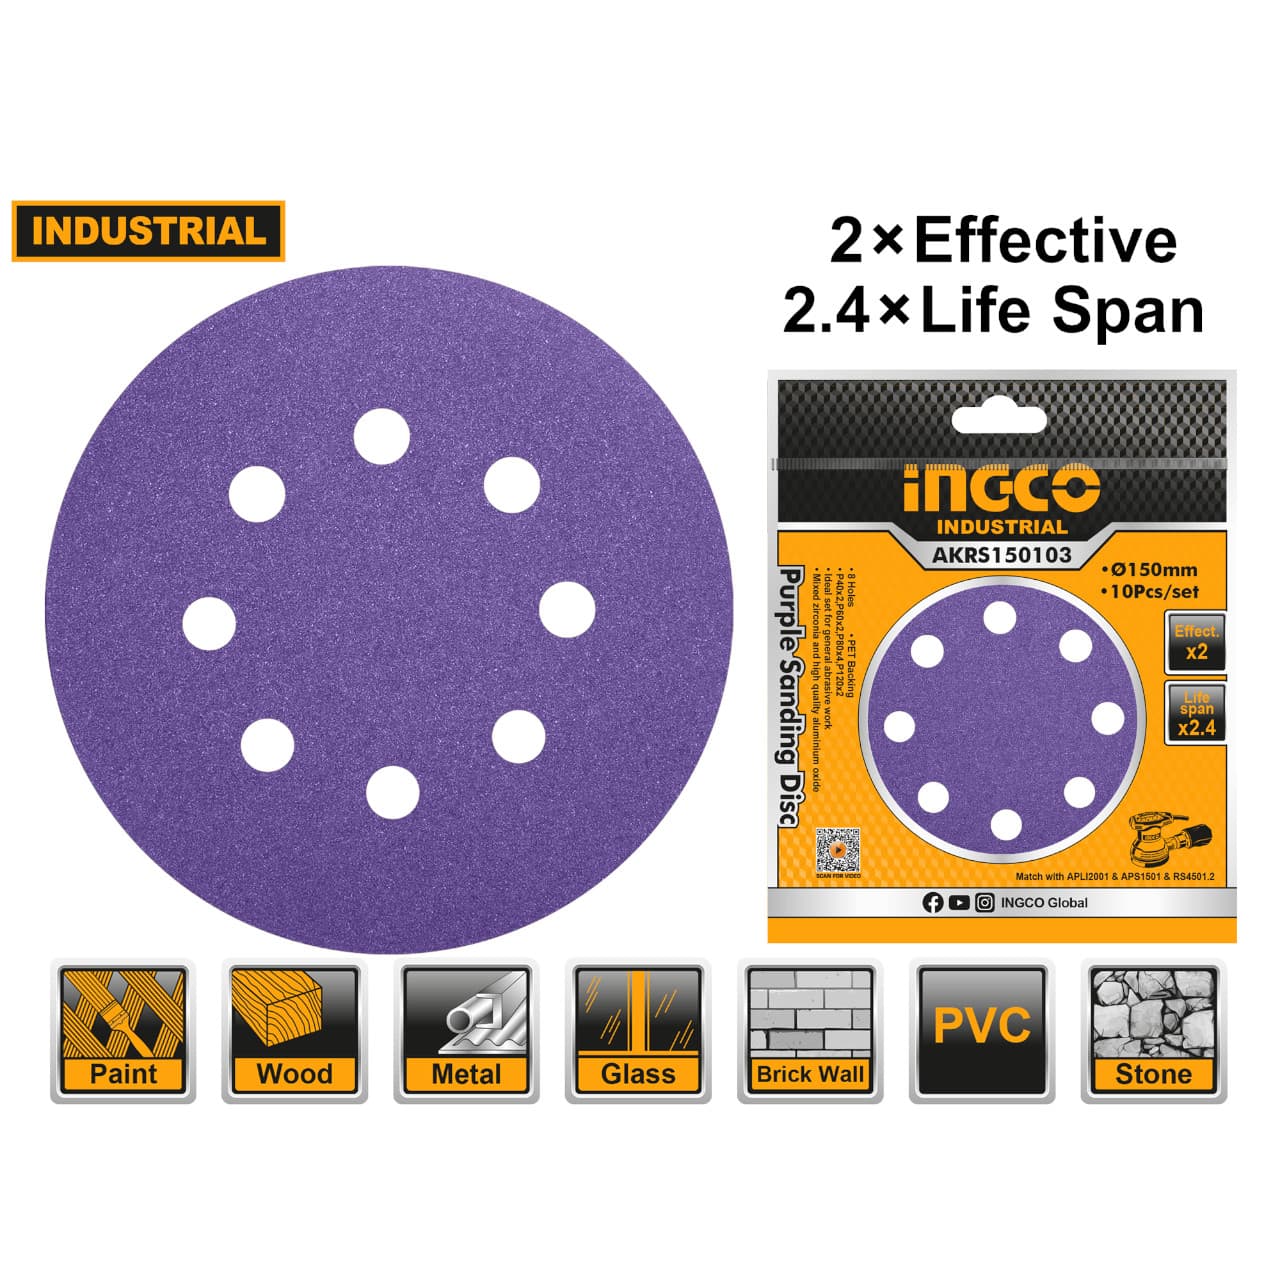 Ingco 10 Pieces Purple Sanding Disc Set 150mm - AKRS150103, Supply Master